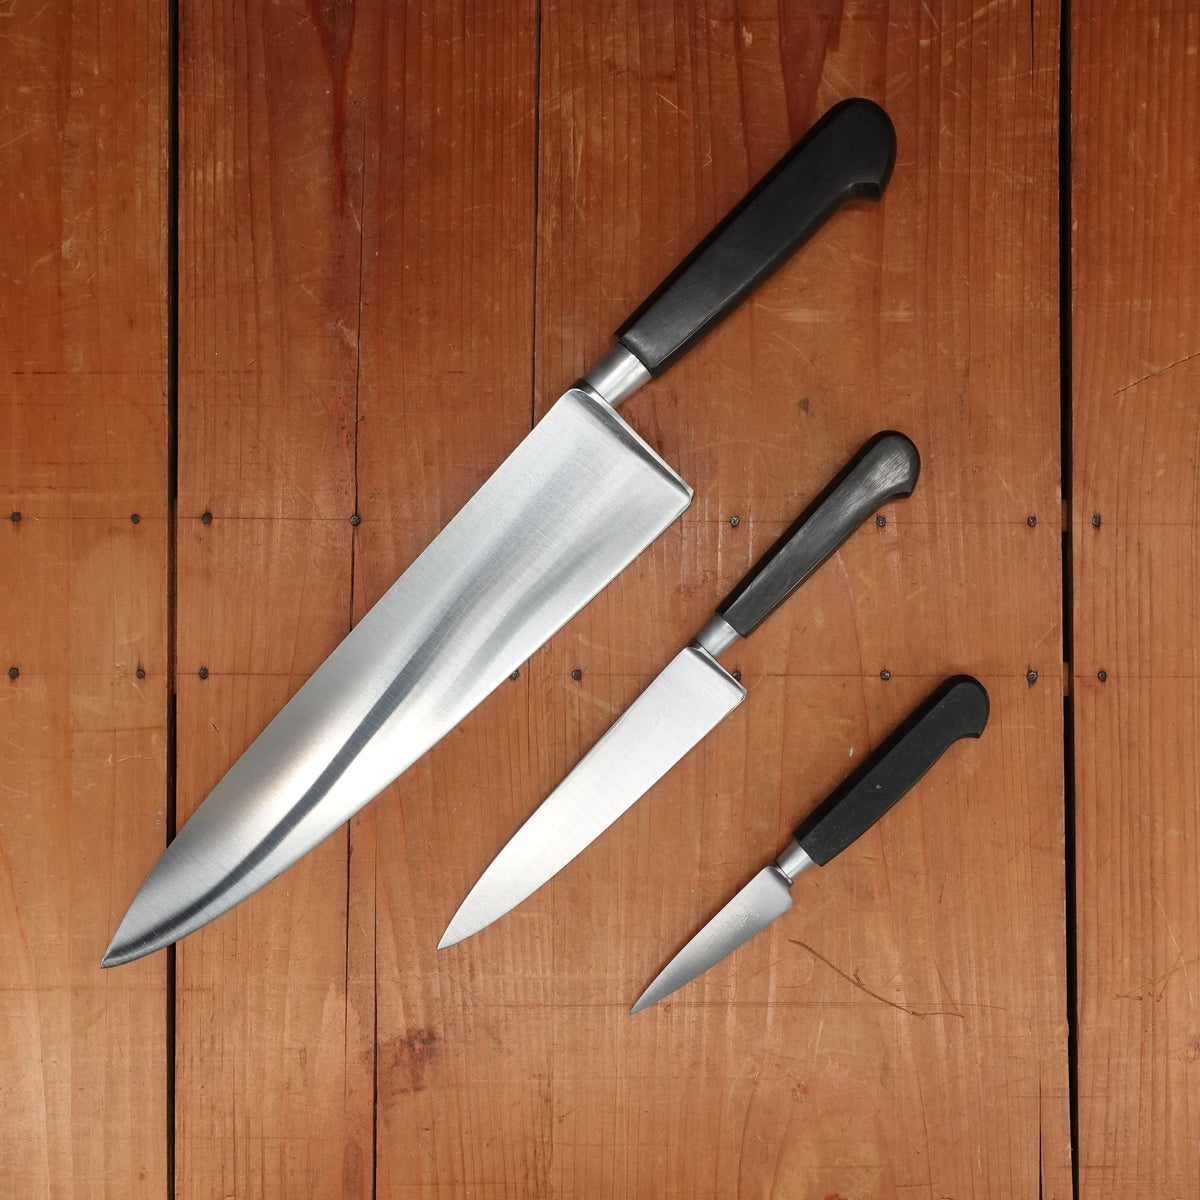 New Vintage K Sabatier Nogent / Cuisine Massive Carbon Knife Set - 3 Pieces